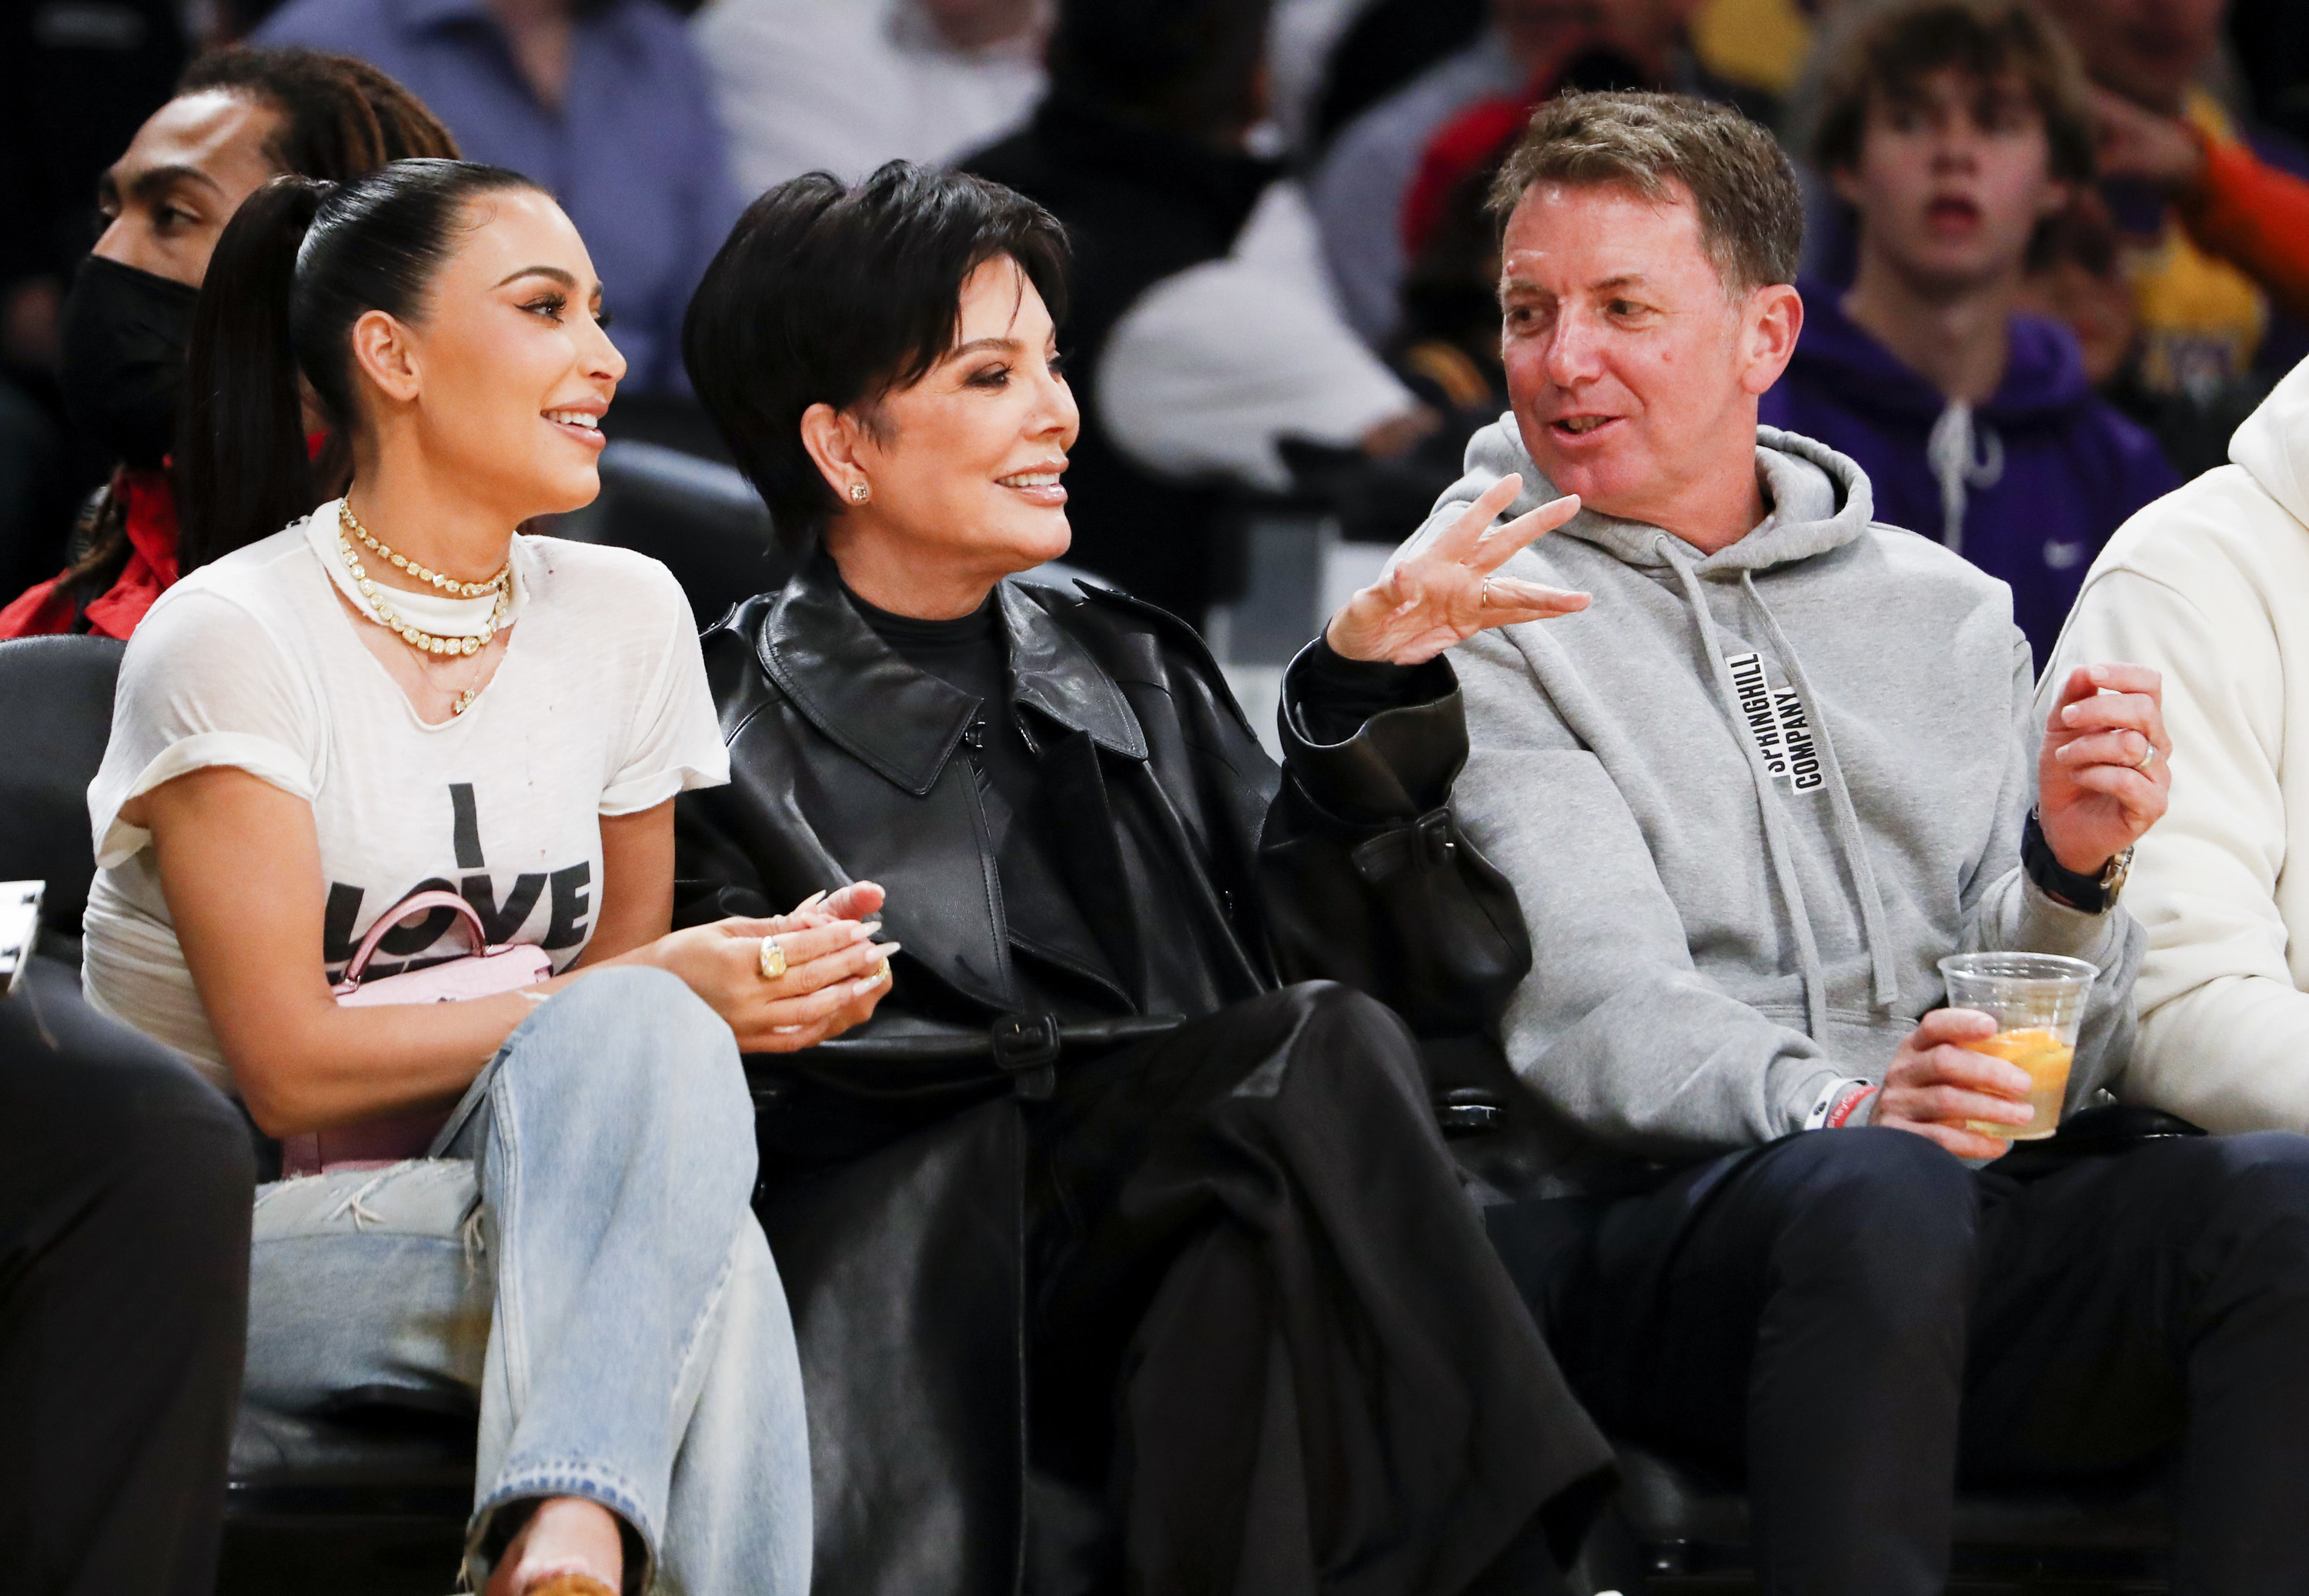 Kim Kardashian and Kris Jenner courtside at a Lakers game